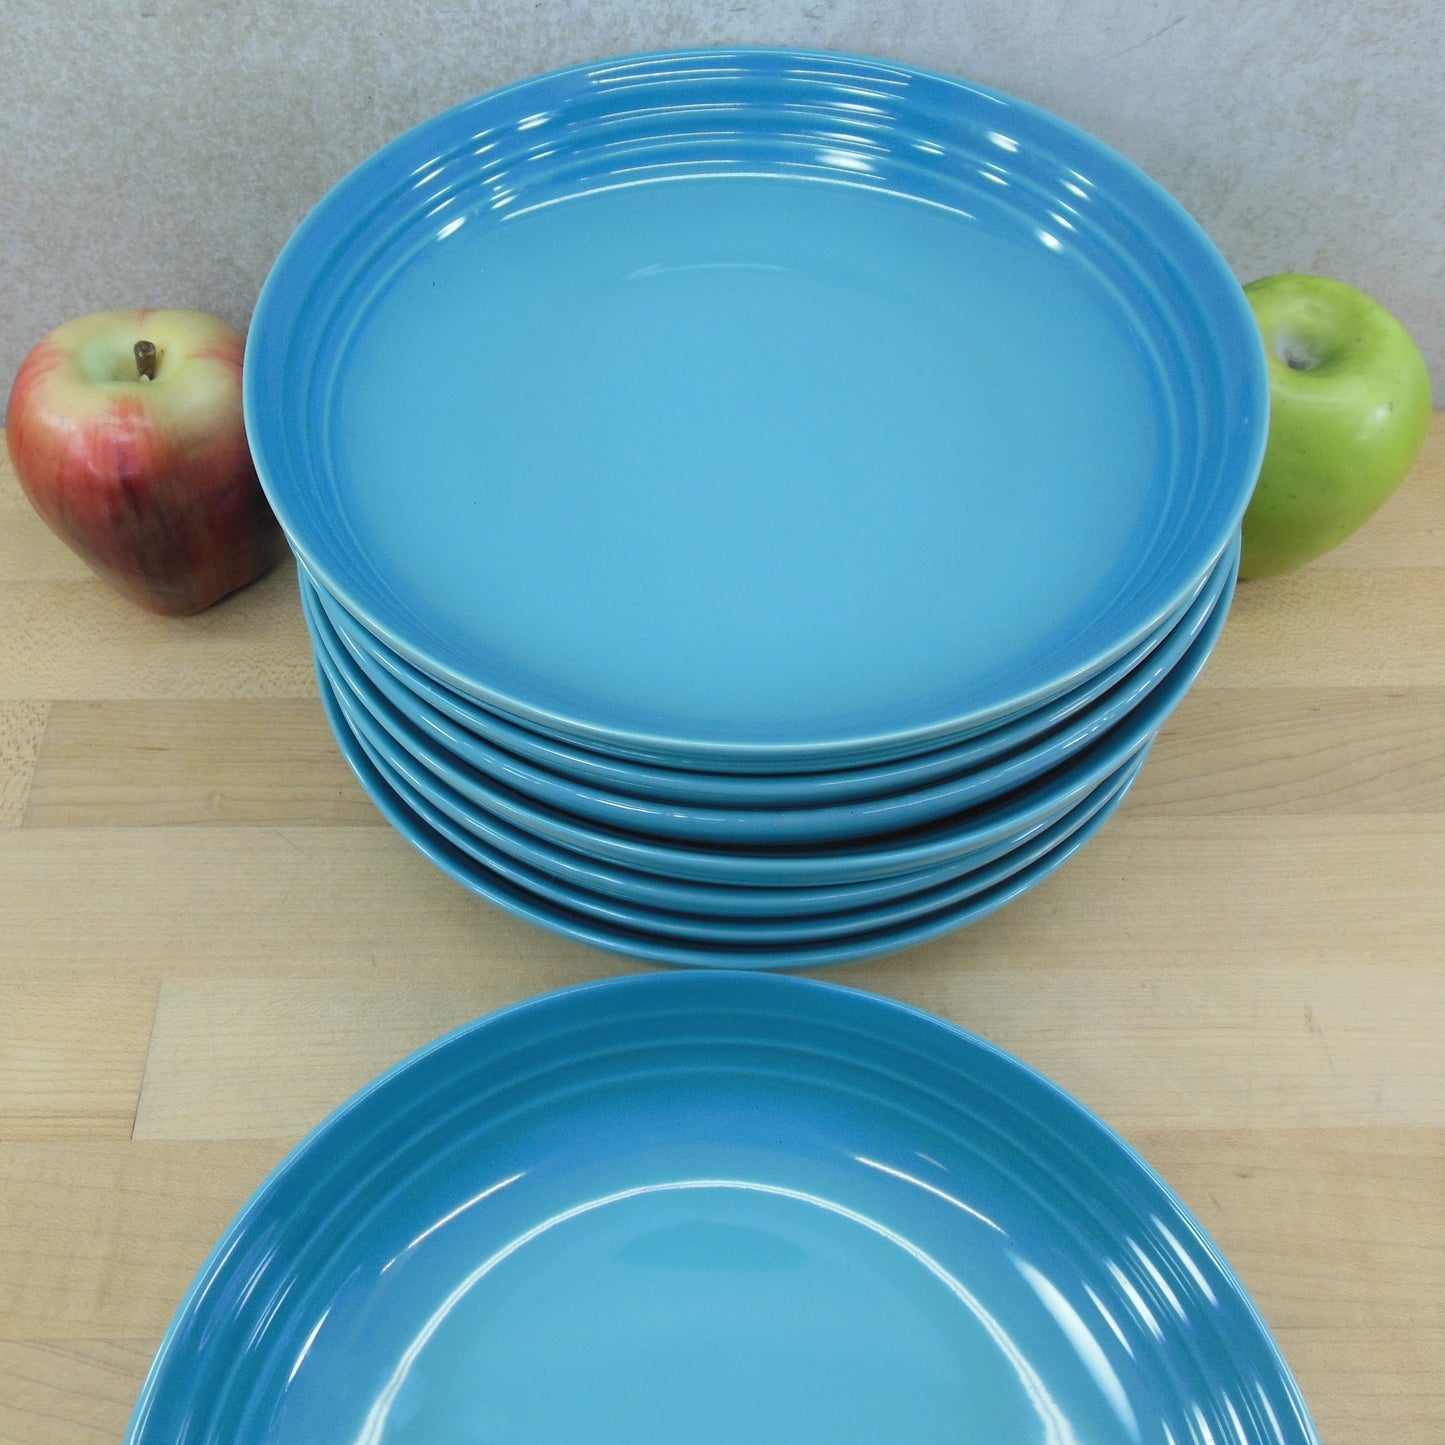 Le Creuset Stoneware Caribbean Blue Teal - 8 Pasta Bowls 8.5" aqua turquoise